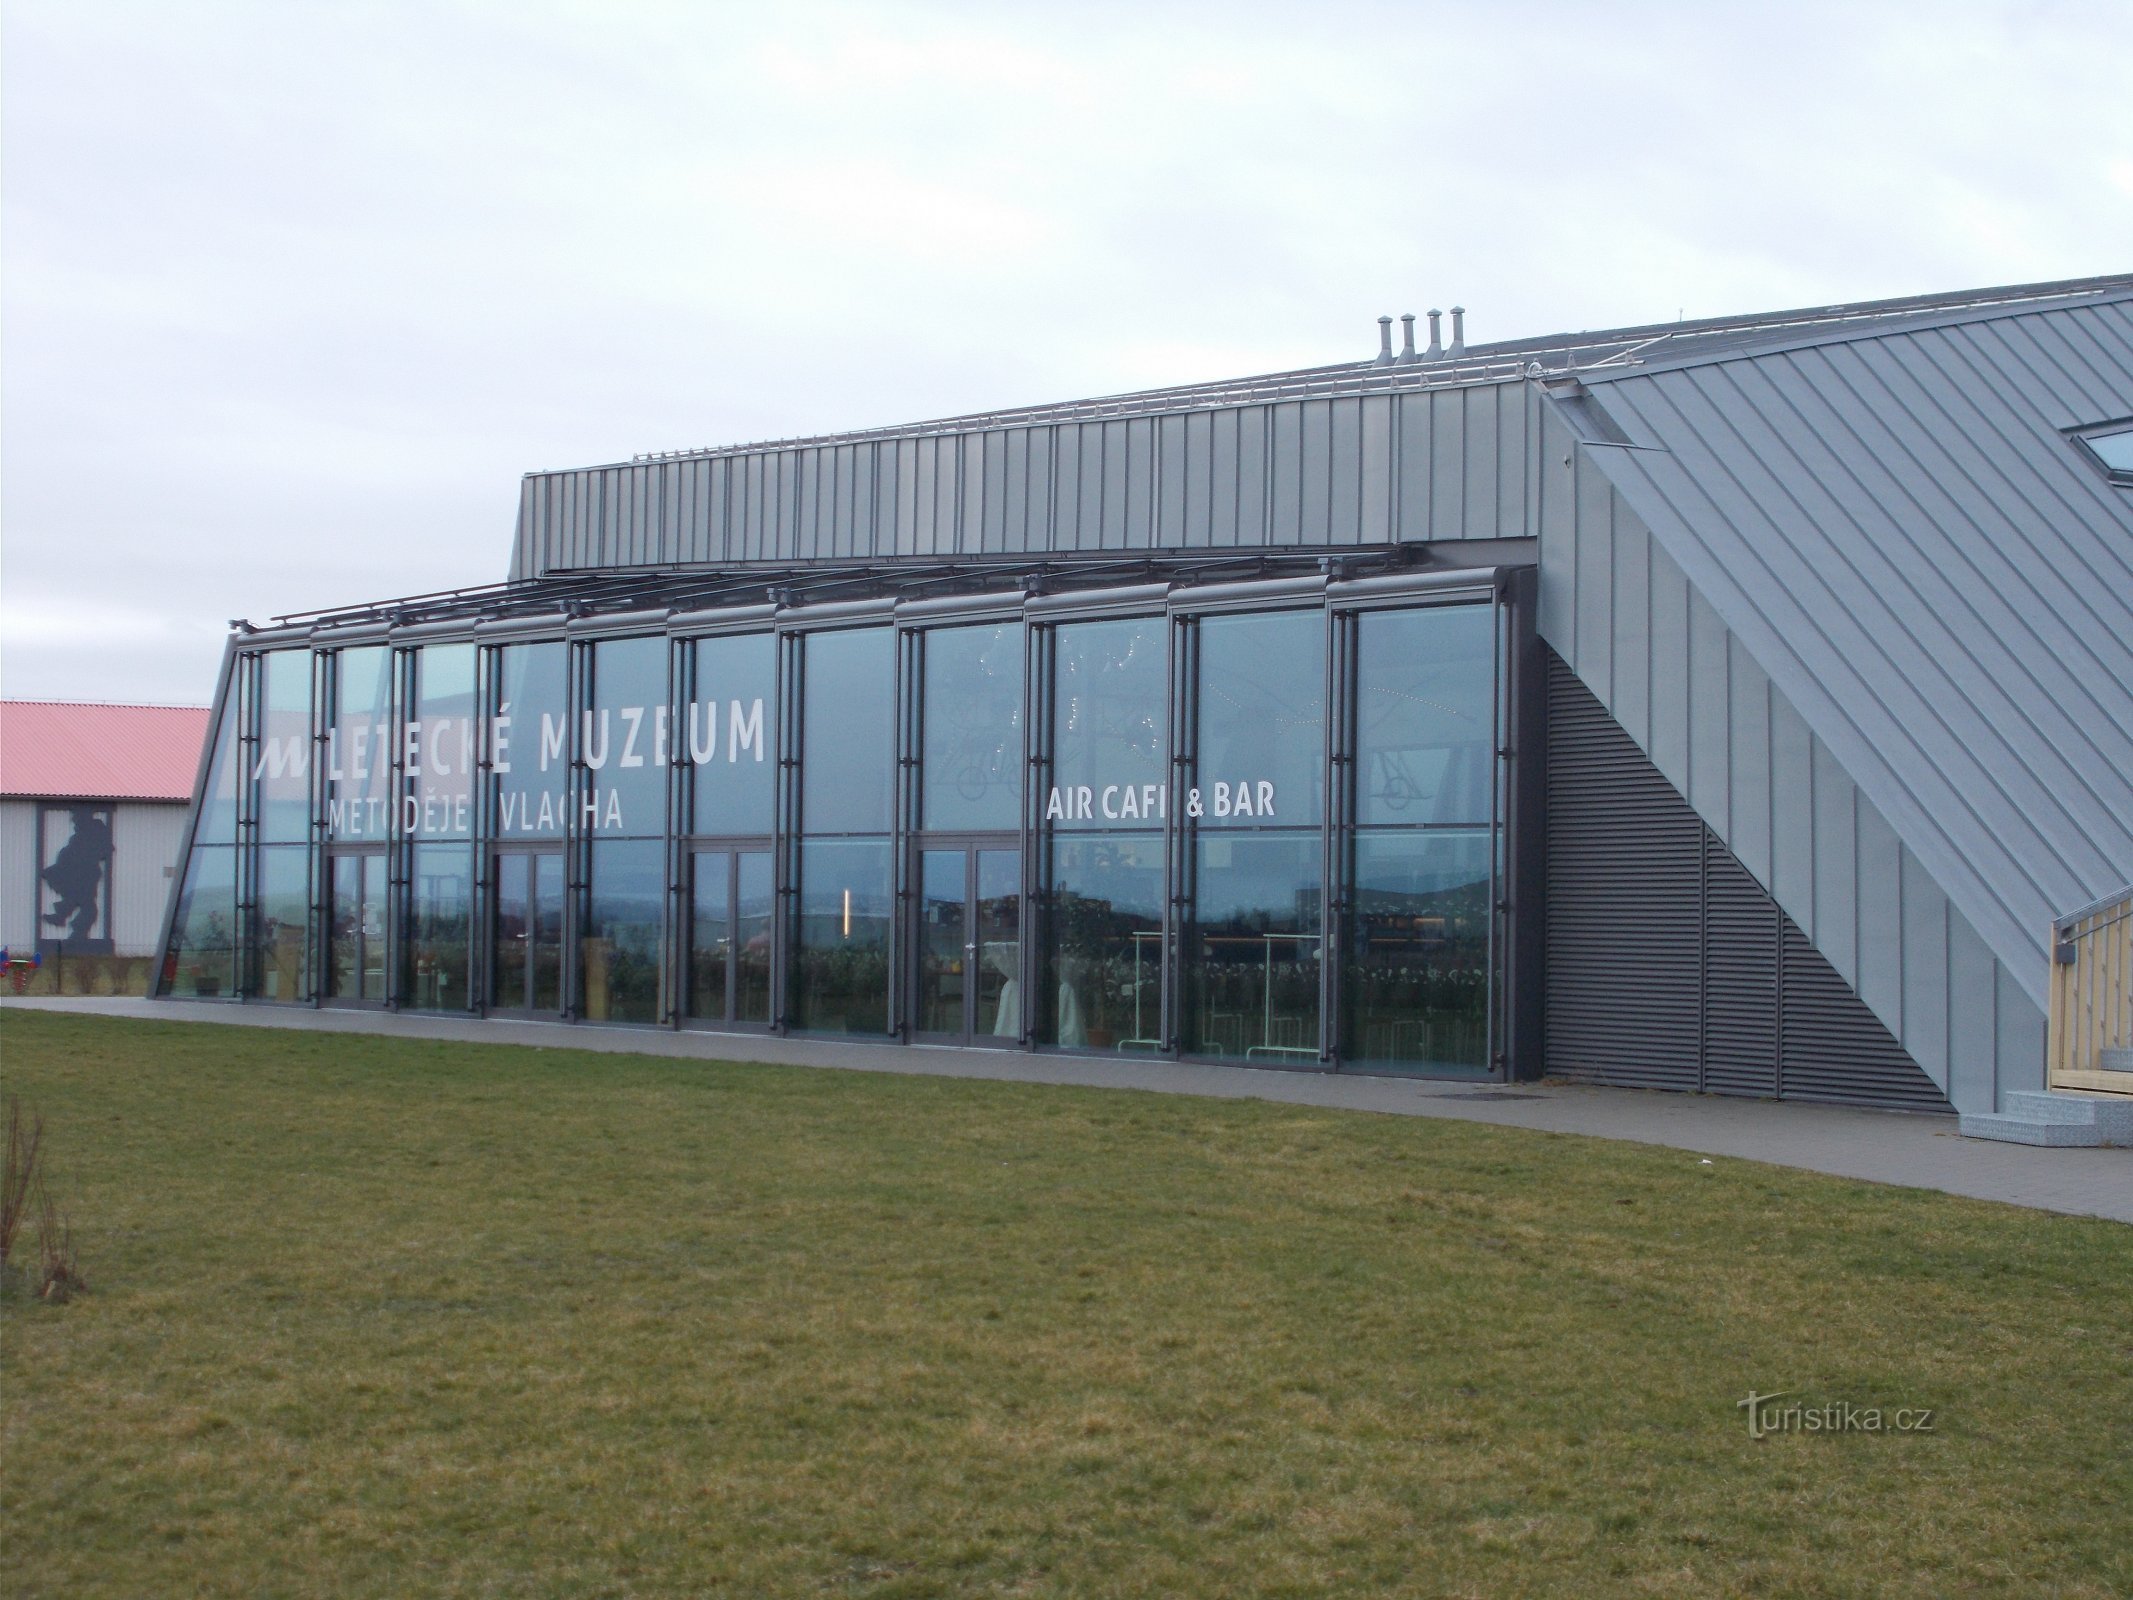 Musée de l'aviation Metoděj Vlach